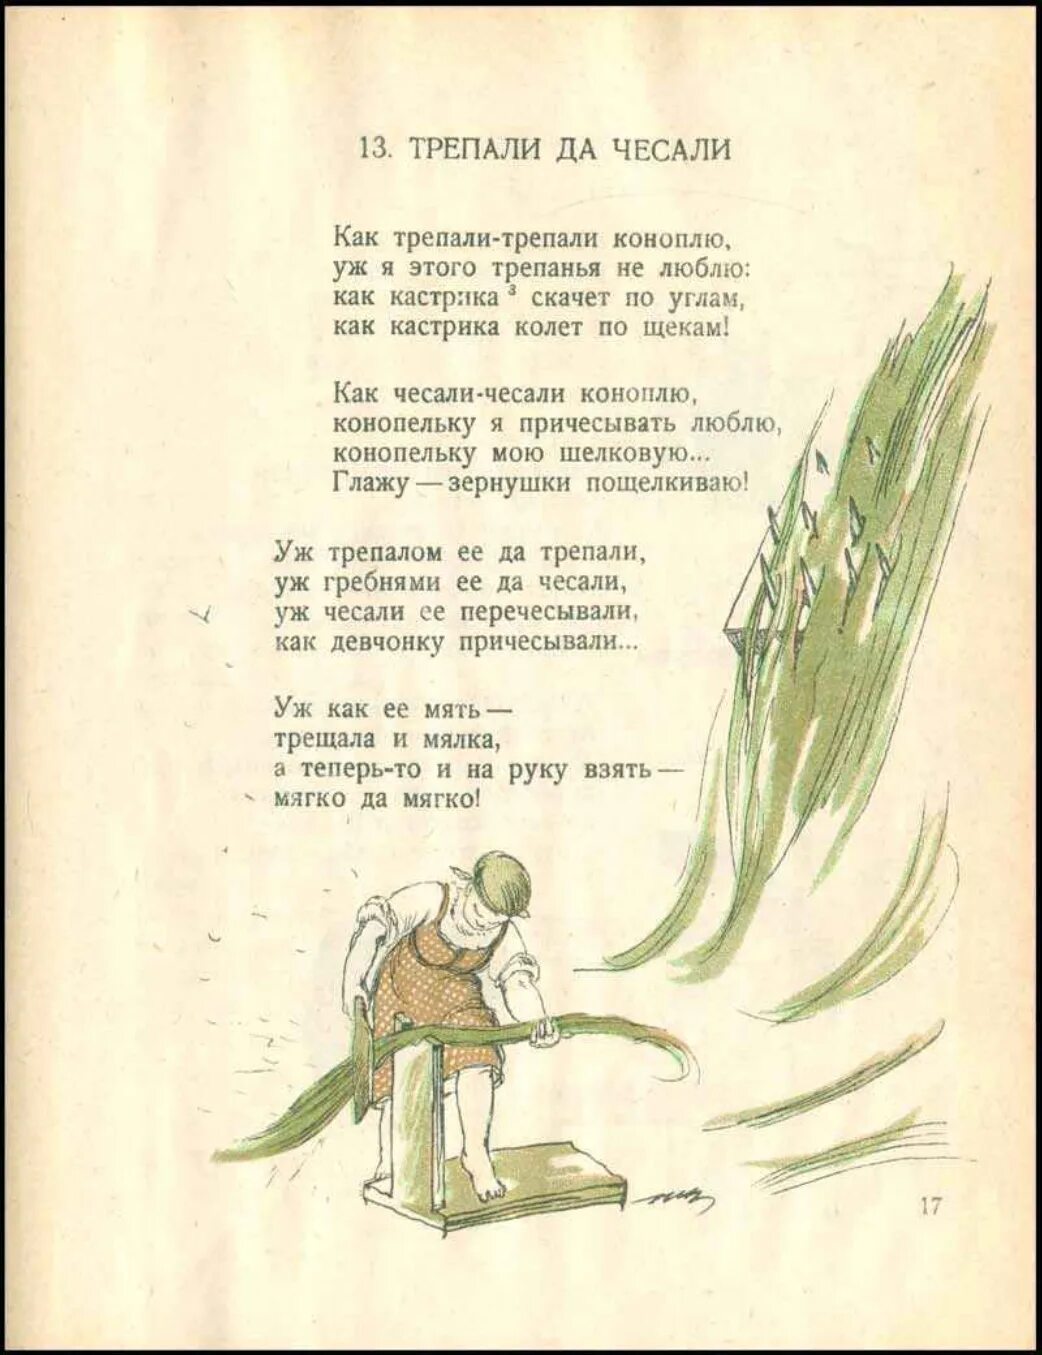 Стихотворение 1926 года. Книга конопель-Конопелька. Конопель Конопелька книга 1926. Детская книжка про коноплю, 1926 год..